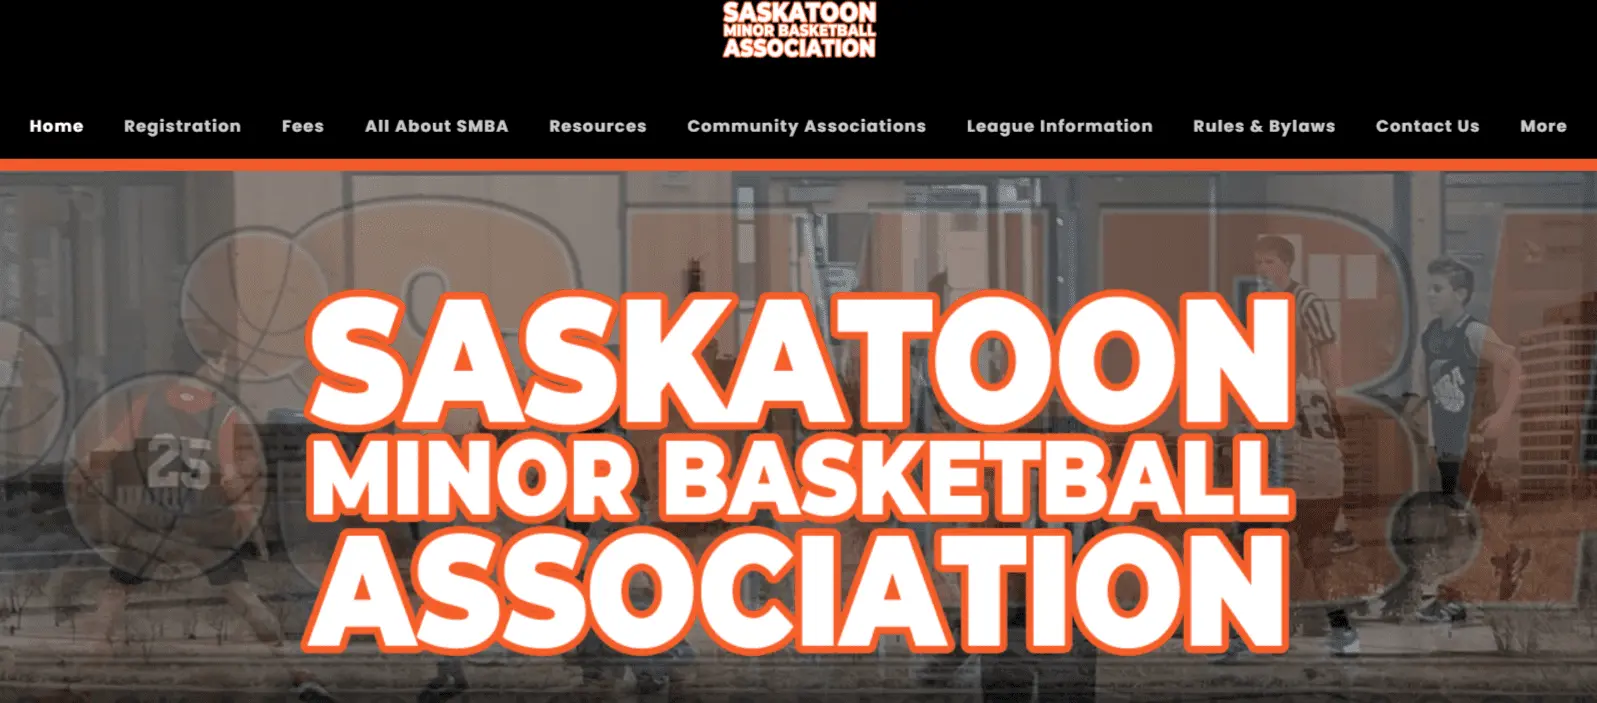 Saskatoon Minor Basketball Association Case Study